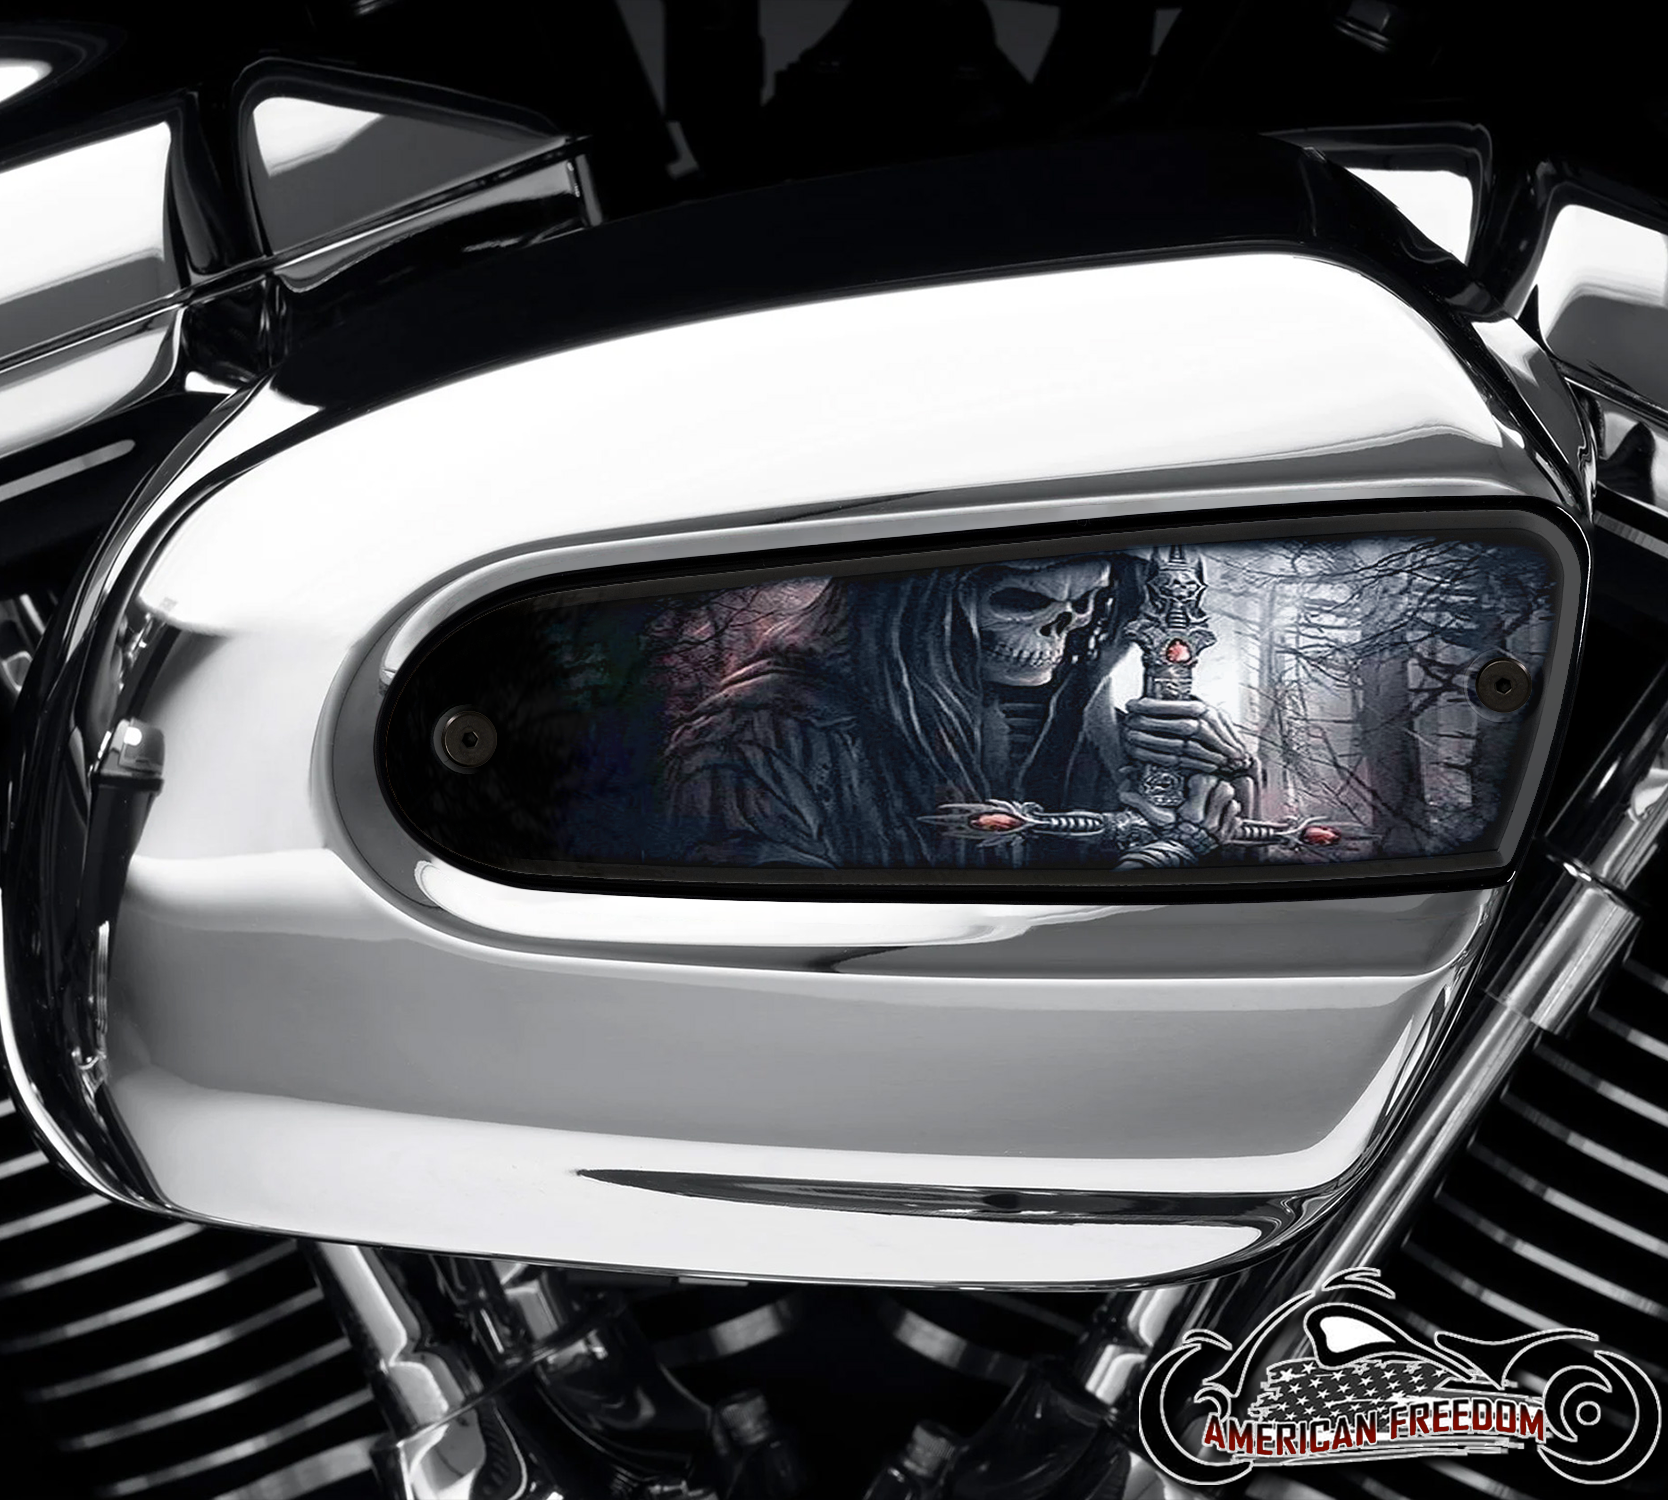 Harley Davidson Wedge Air Cleaner Insert - Reaper & Blade